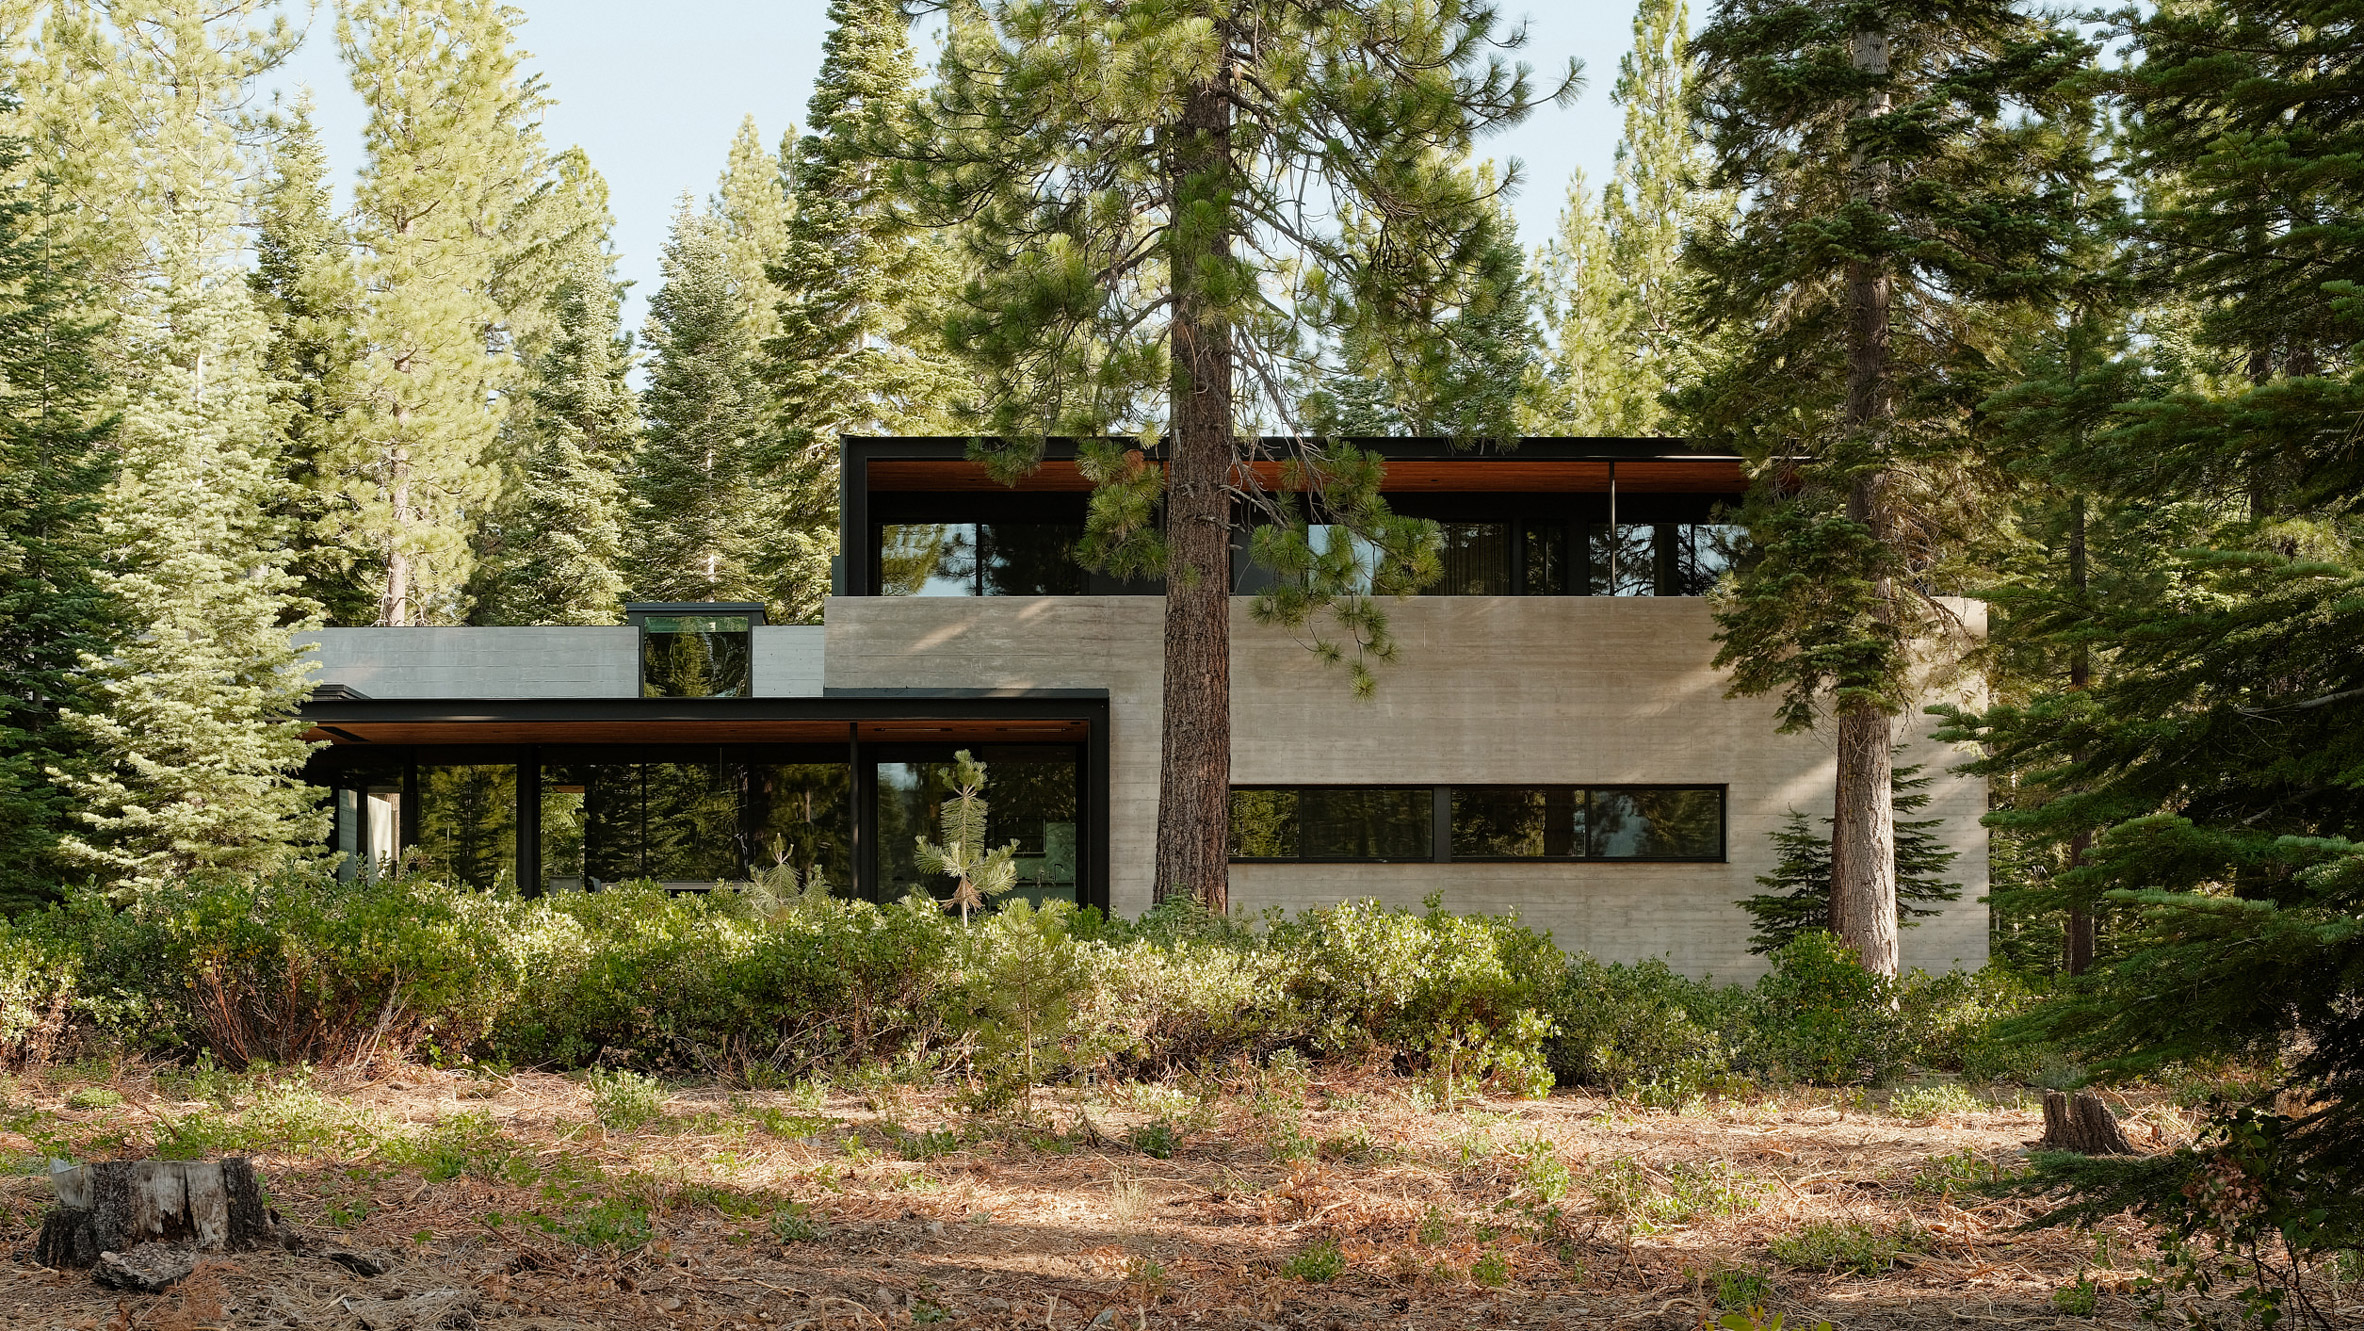 Faulkner Architects designed the dwelling near Lake Tahoe